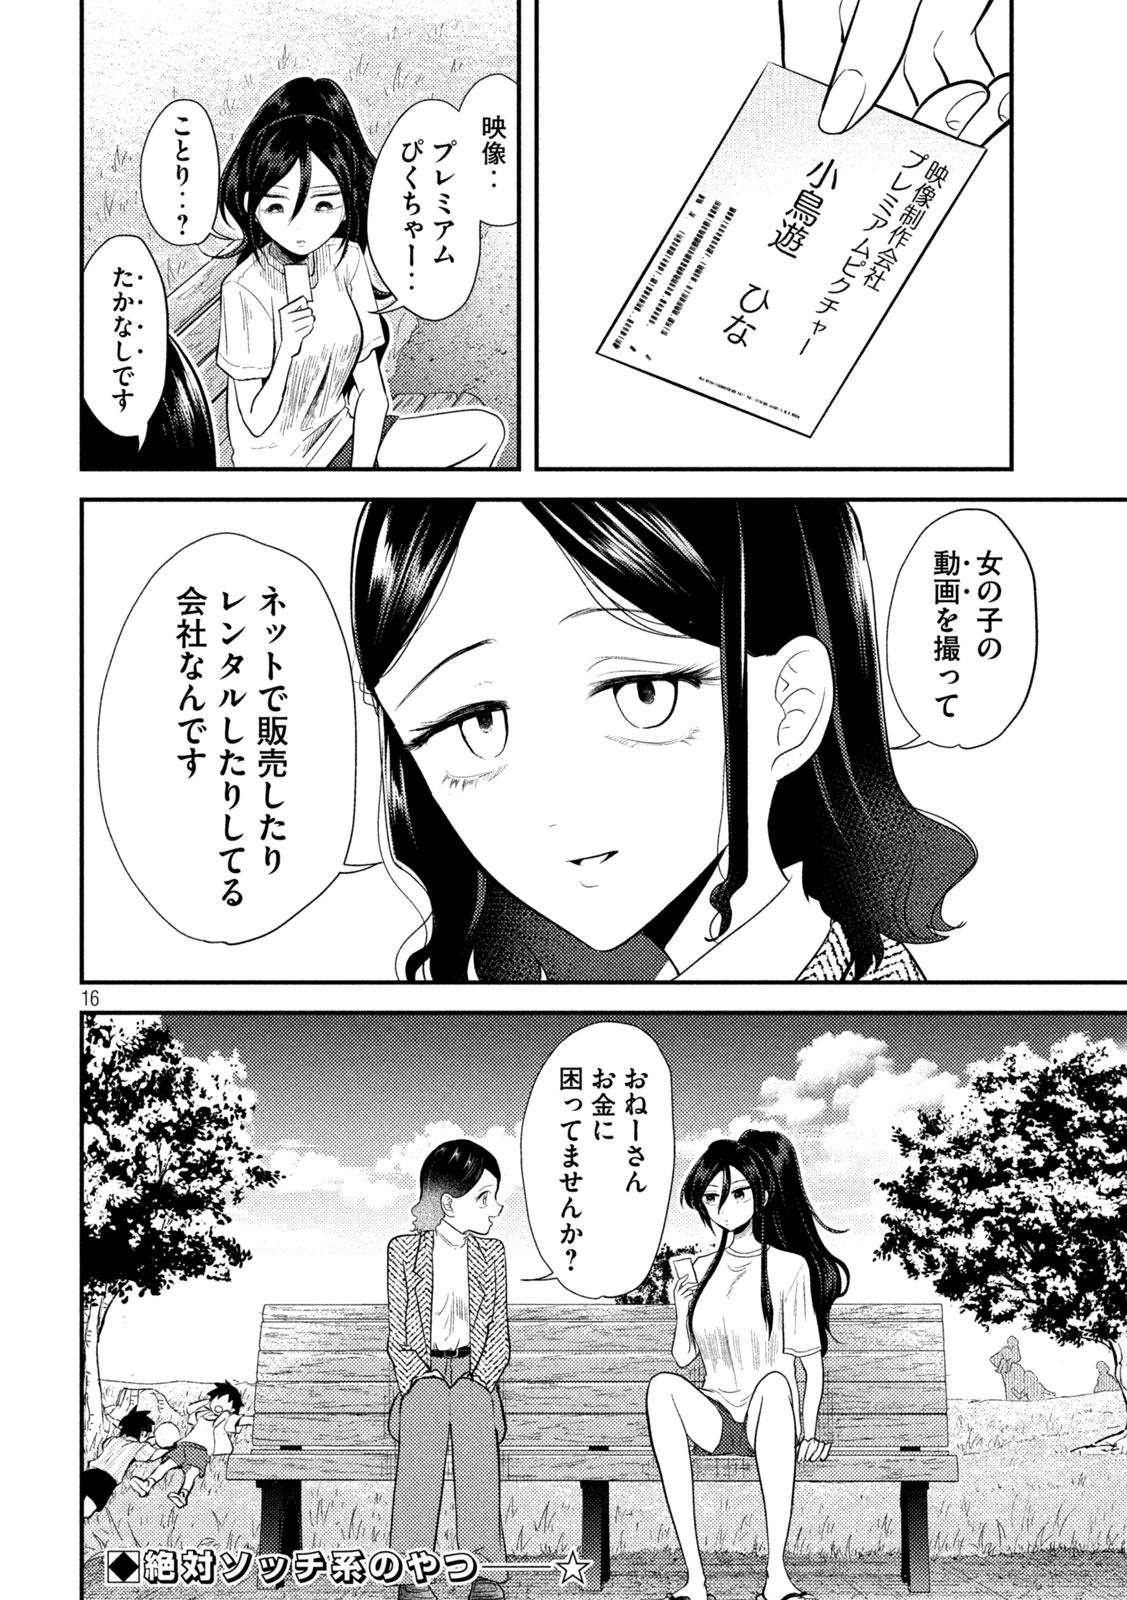 Heisei Haizanhei Sumire-chan - Chapter 13 - Page 16